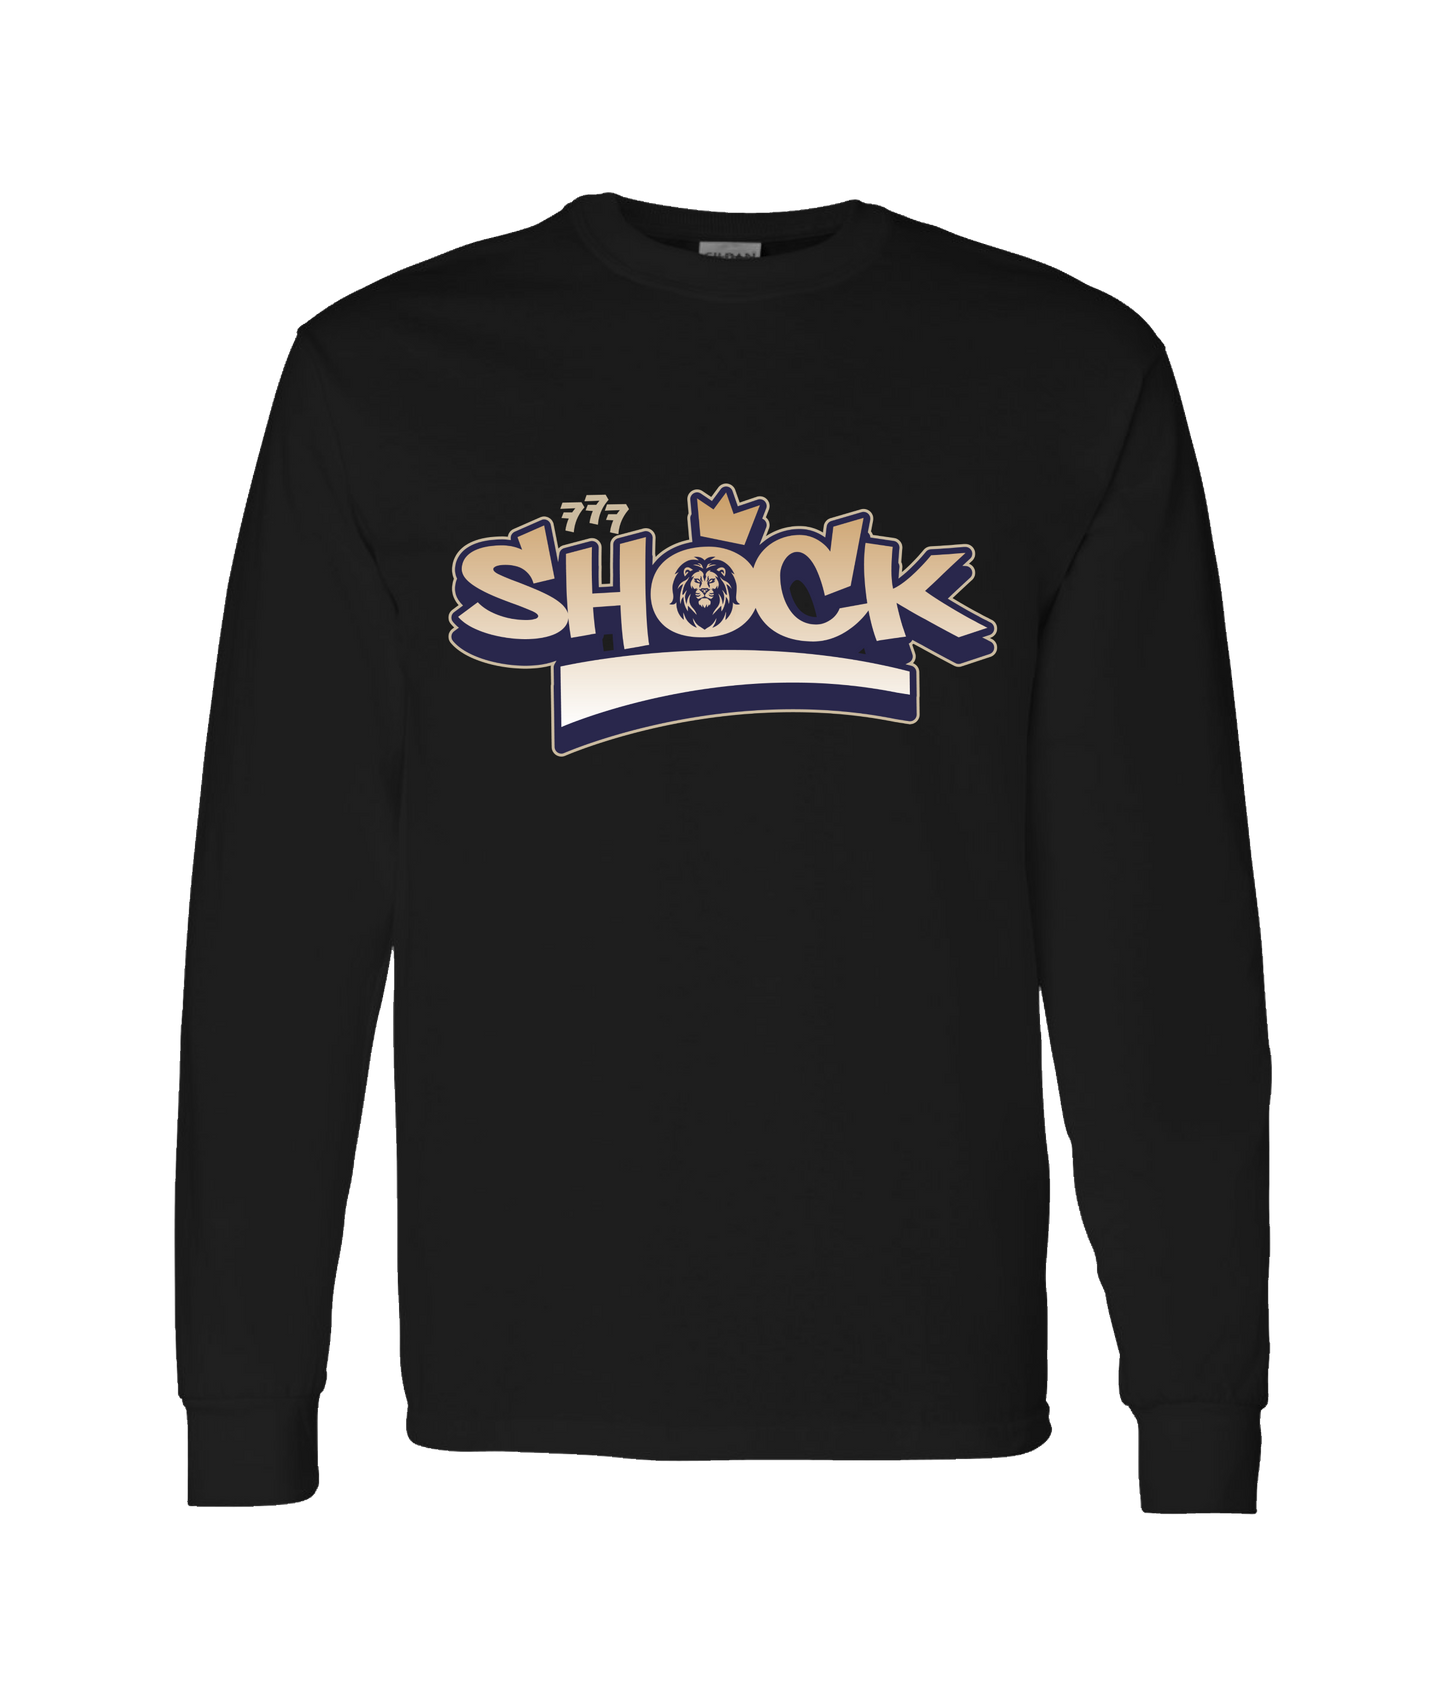 Shock - SHOCK - Black Long Sleeve T